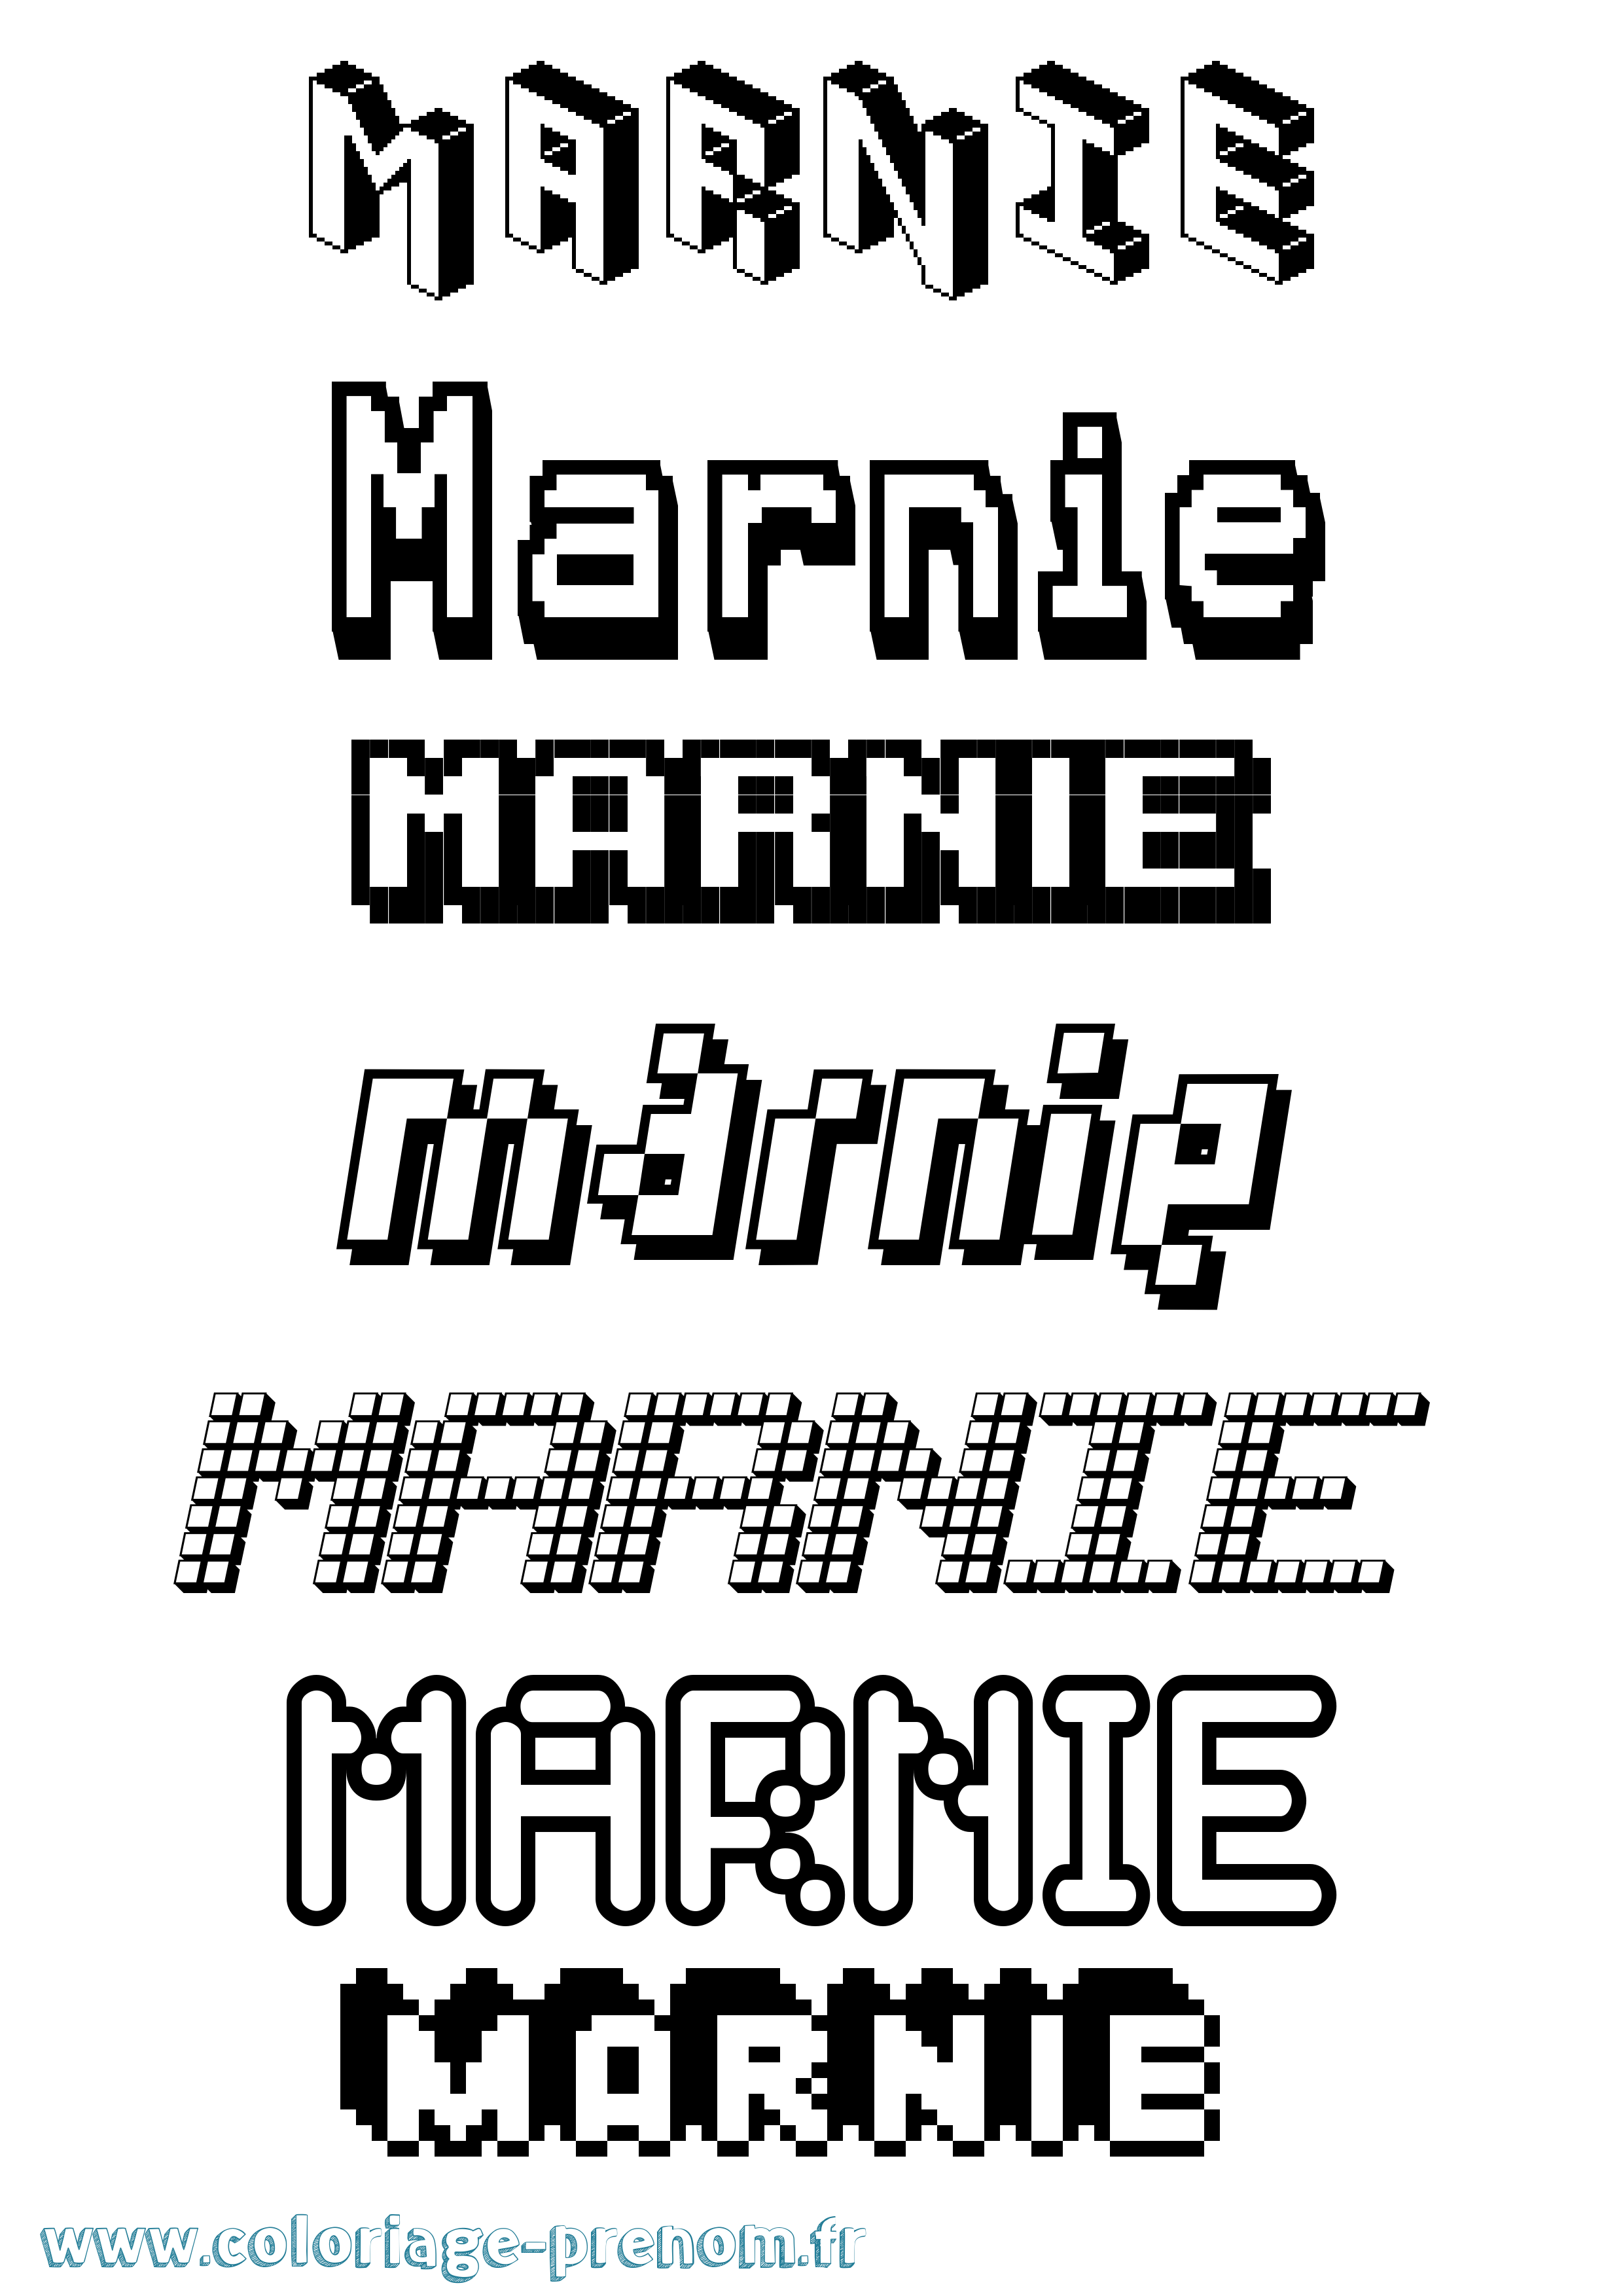 Coloriage prénom Marnie Pixel